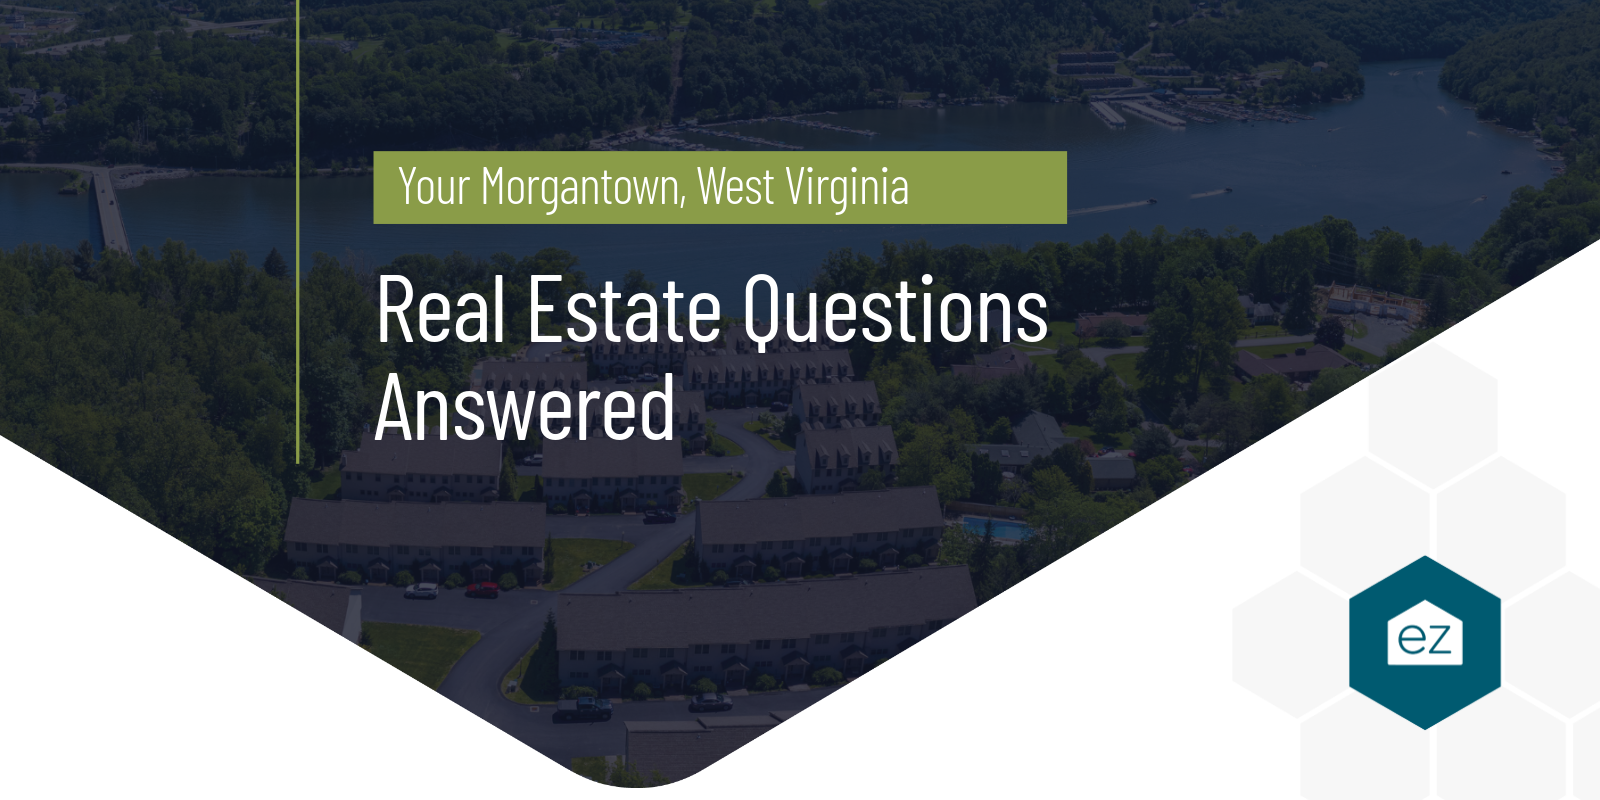 Morgantown Housing Development West Virginia